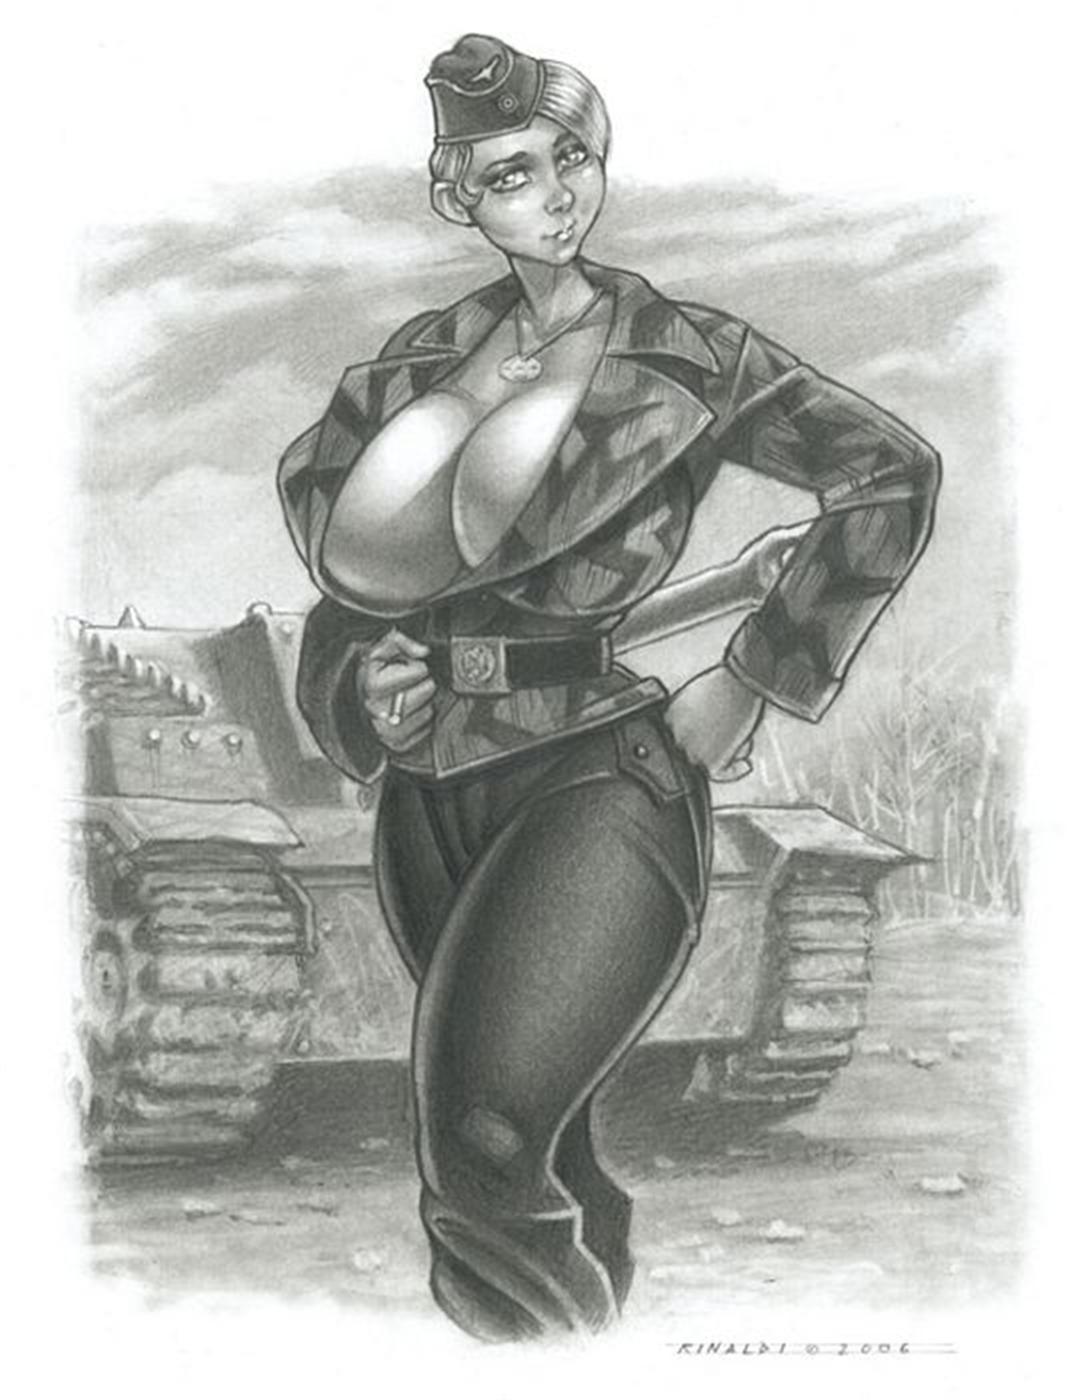 VICTOR RINALDI ART - Huge Tits drawings #2 